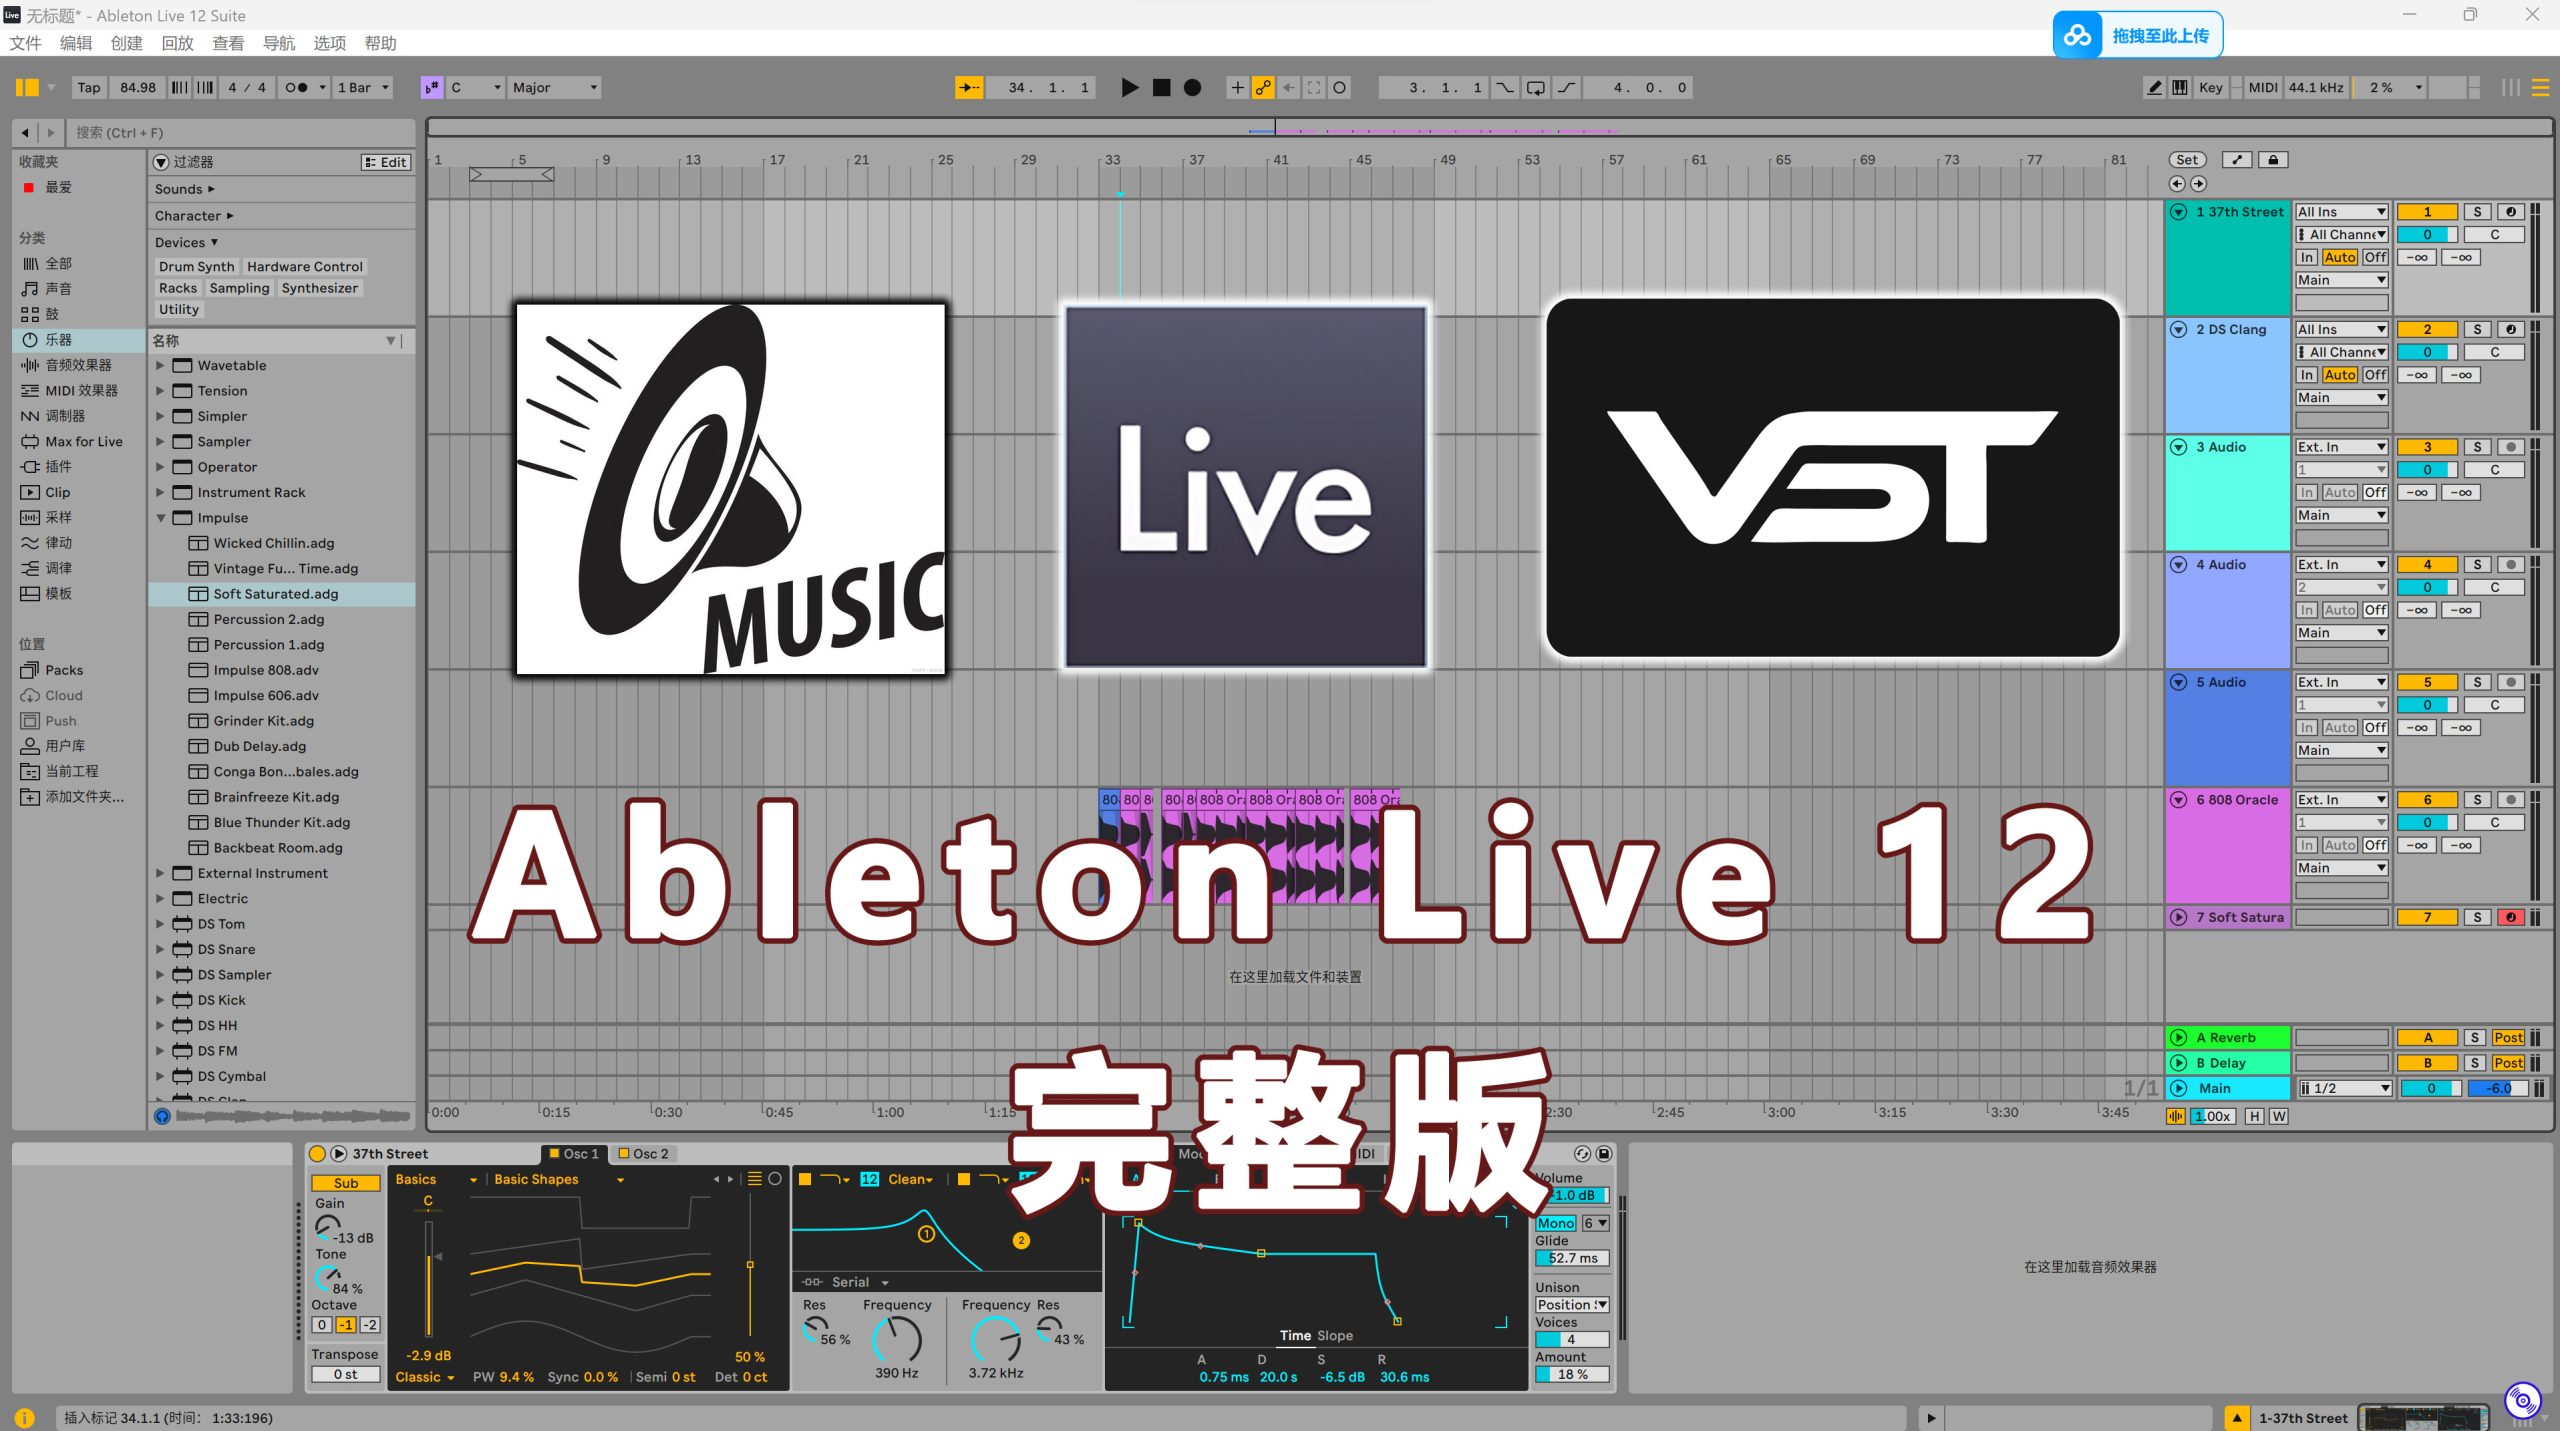 【Ableton Live12完整音色库套装包含超大超多Loops采样+吉他+钢琴+贝斯+合成器音色预设等Ableton Live制作人必备套装】